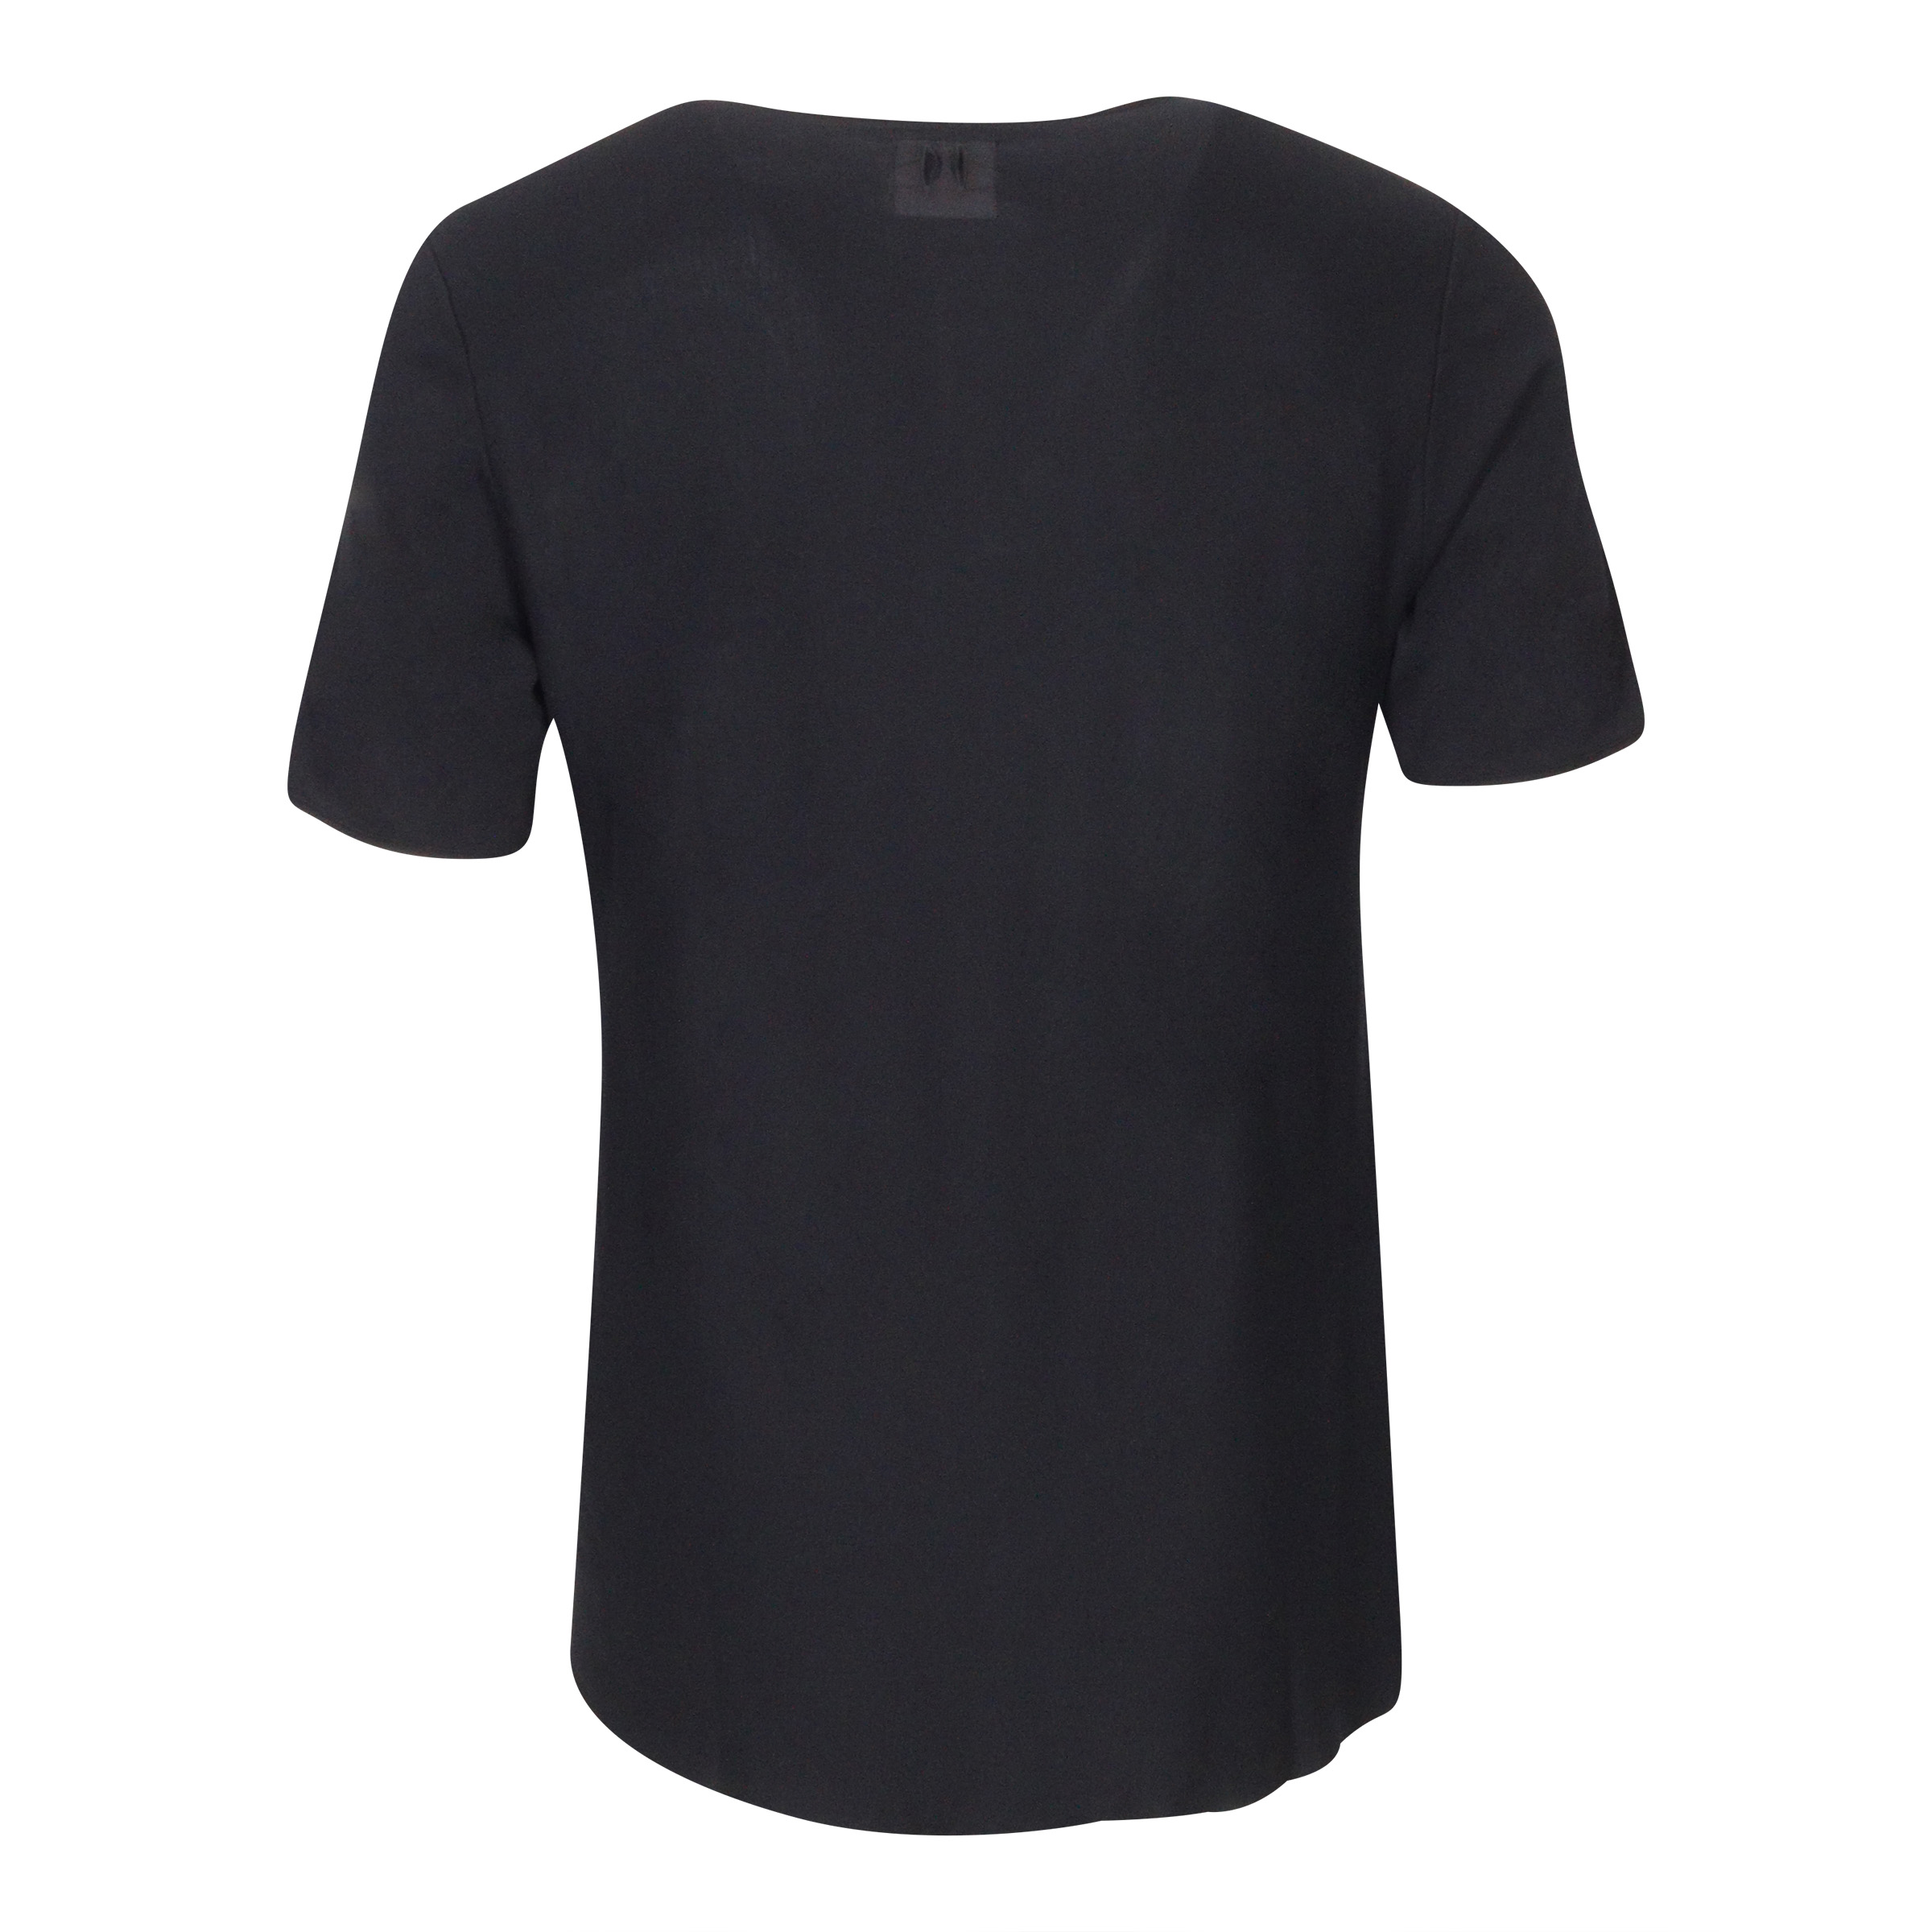 Hannes Roether T-Shirt Black